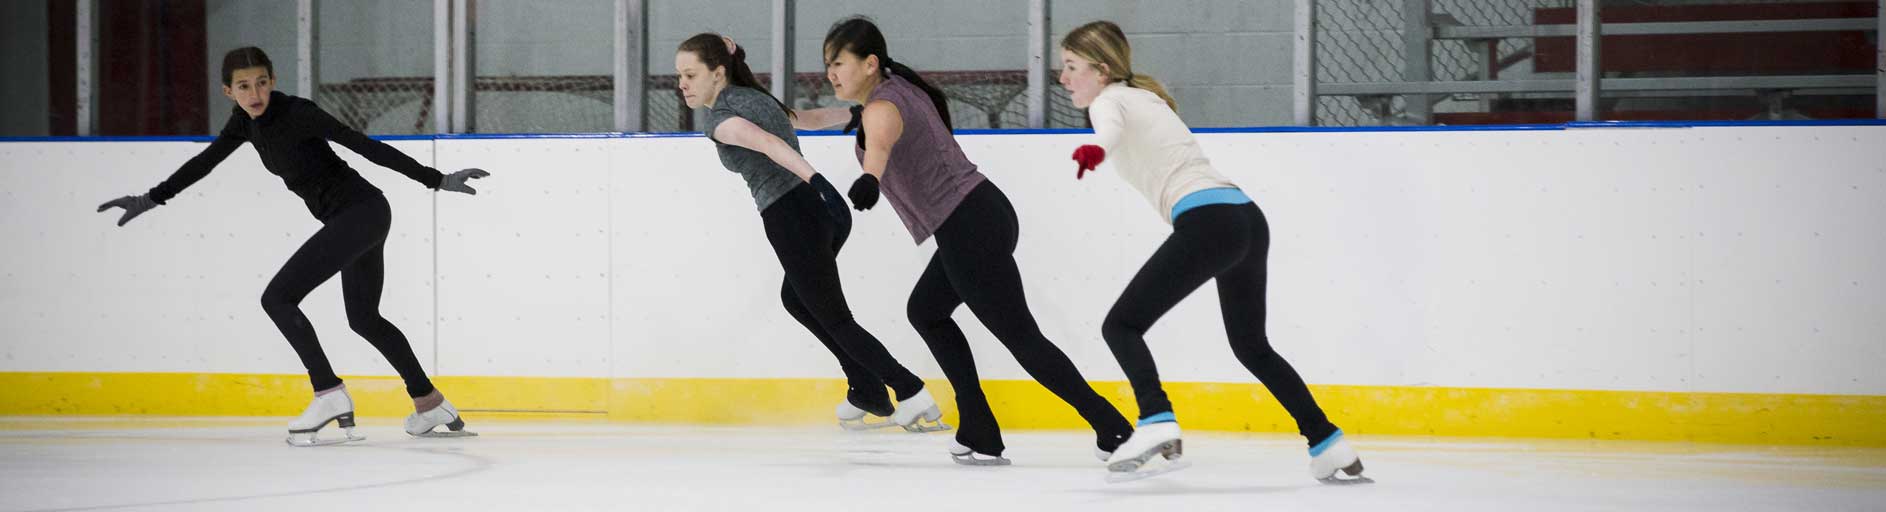 Figure Skating Equipment header image